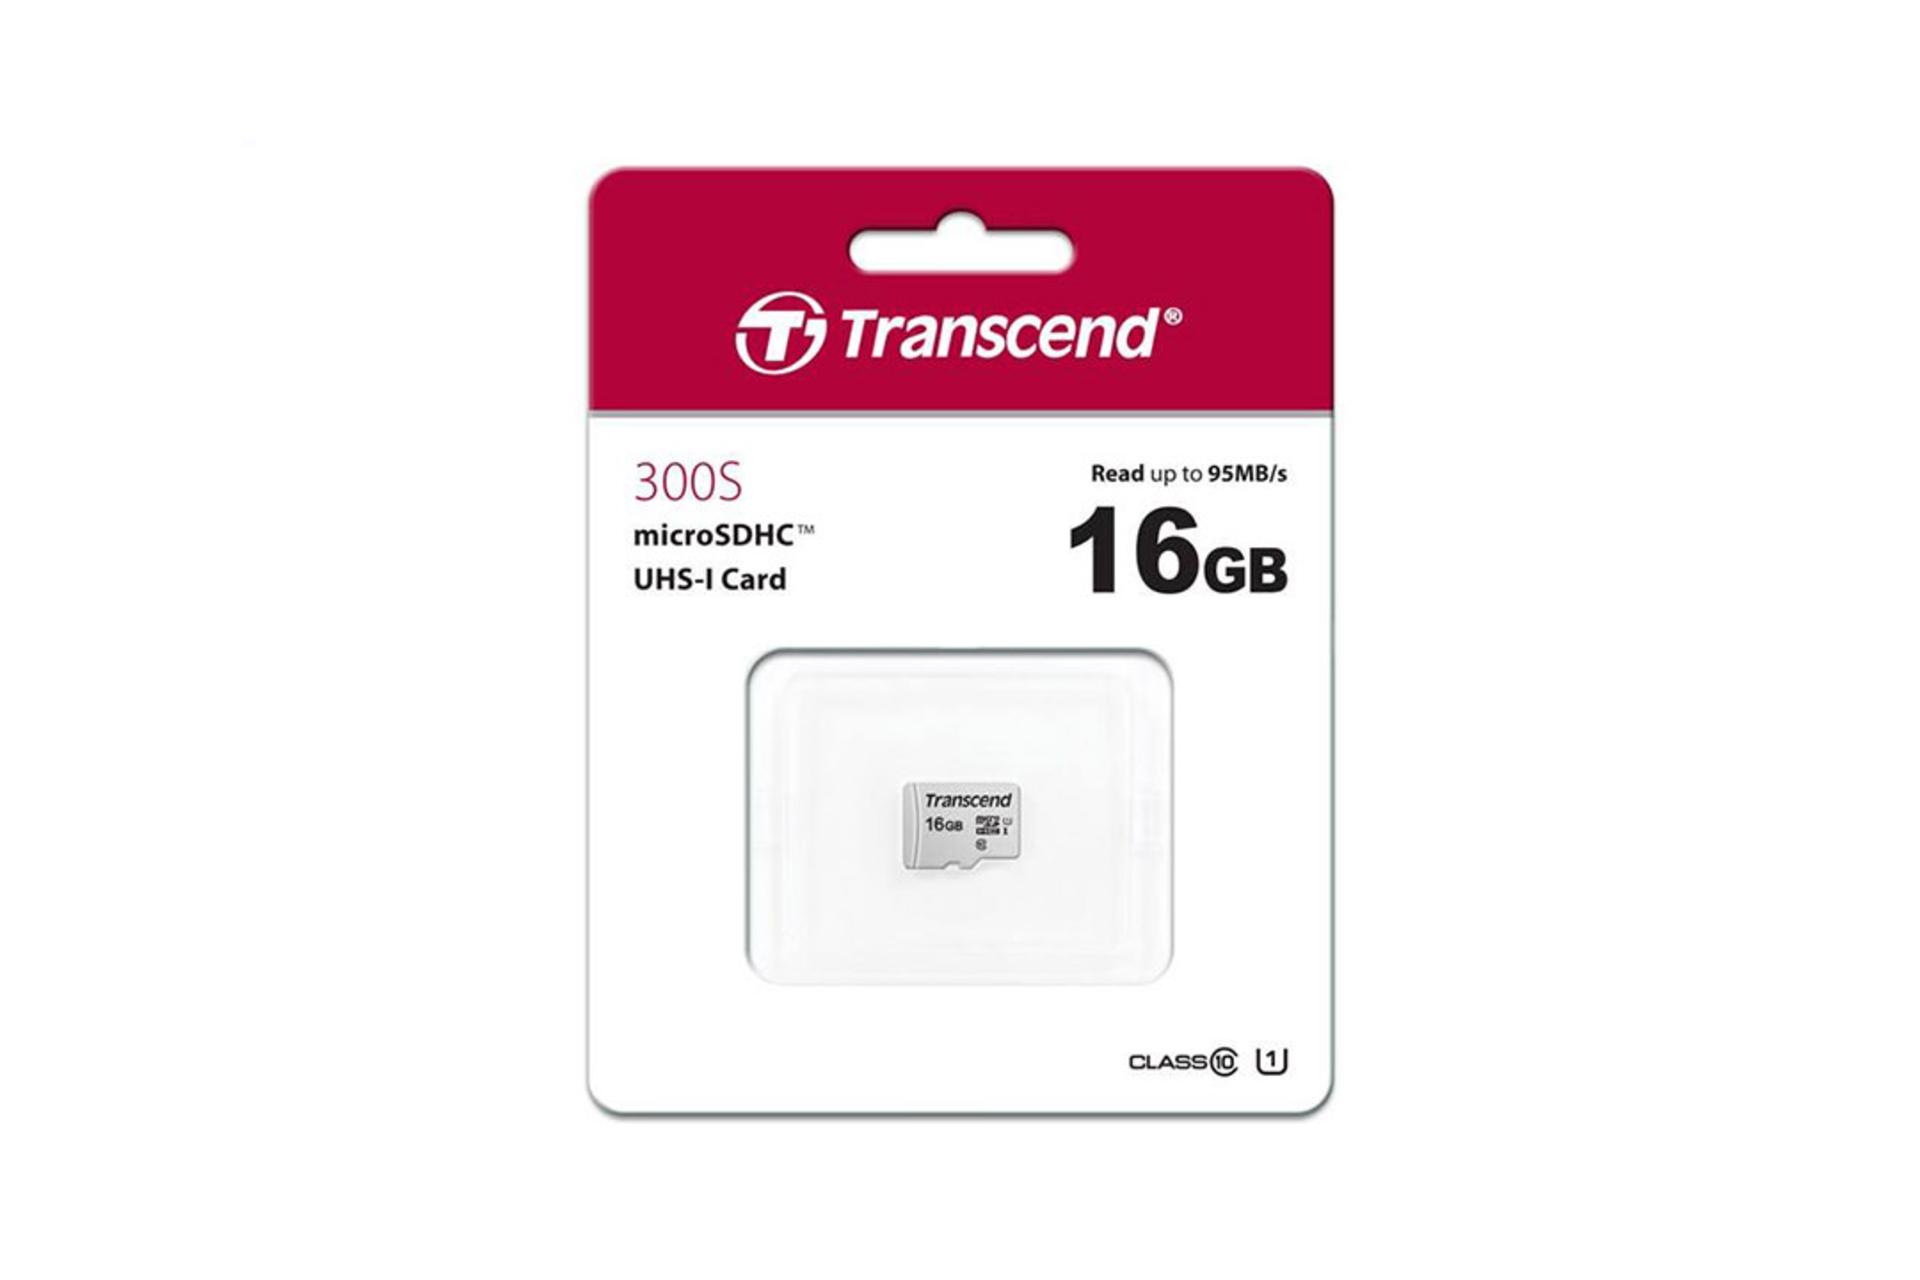 Transcend 300S microSDHC Class 10 UHS-I U1 16GB